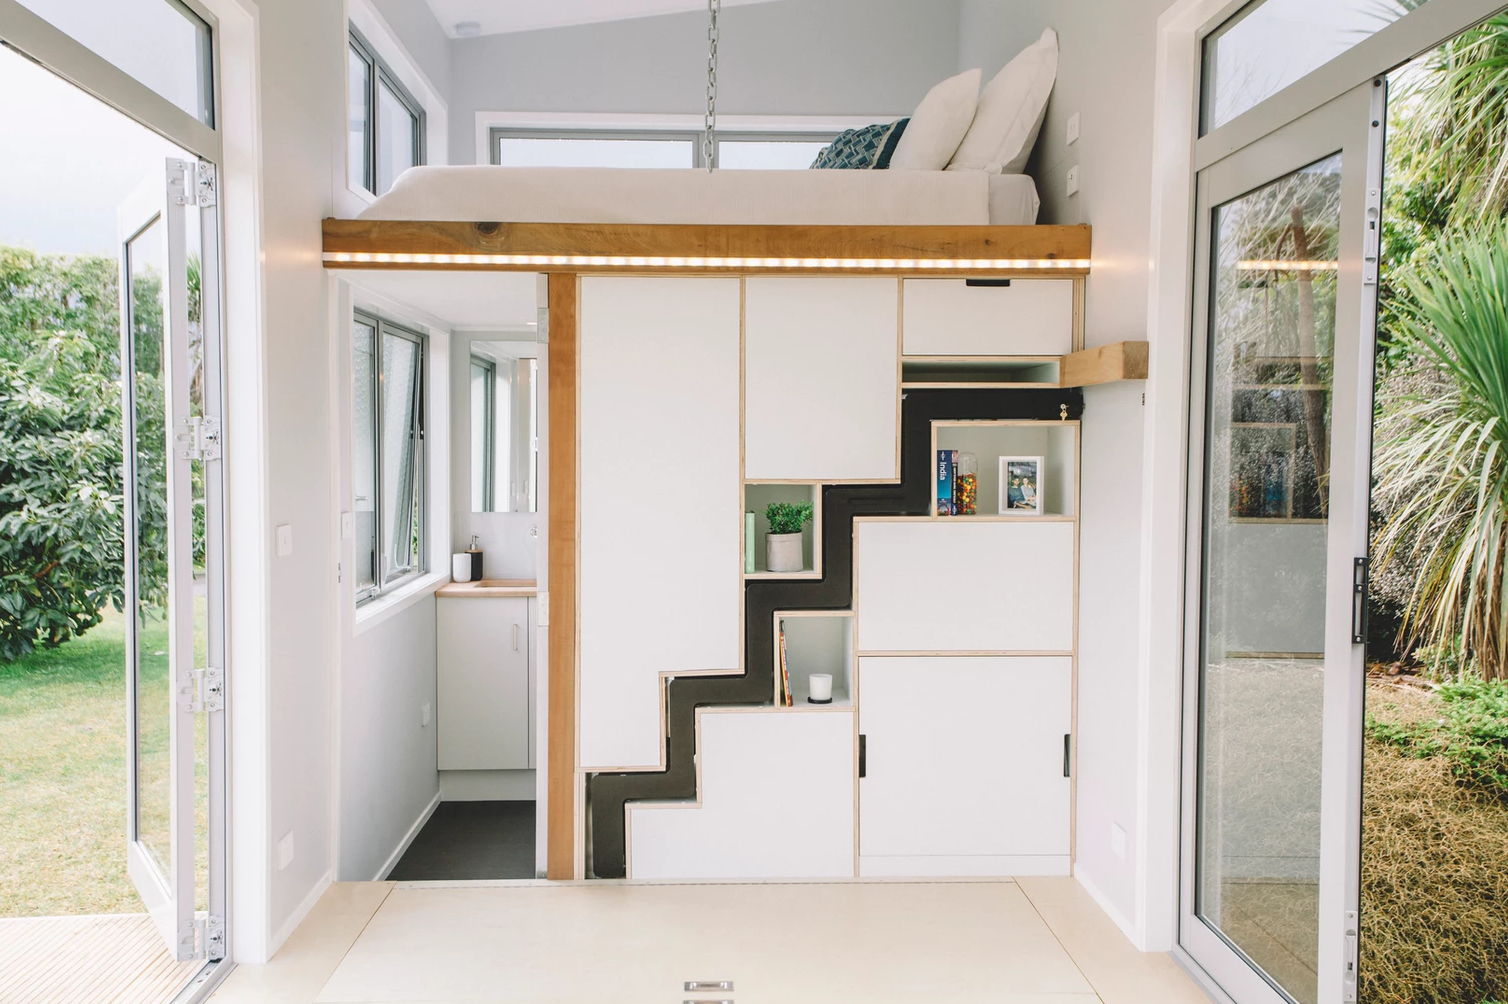 The Millennial Tiny House Bathroom, Staircase and Bedroom Loft